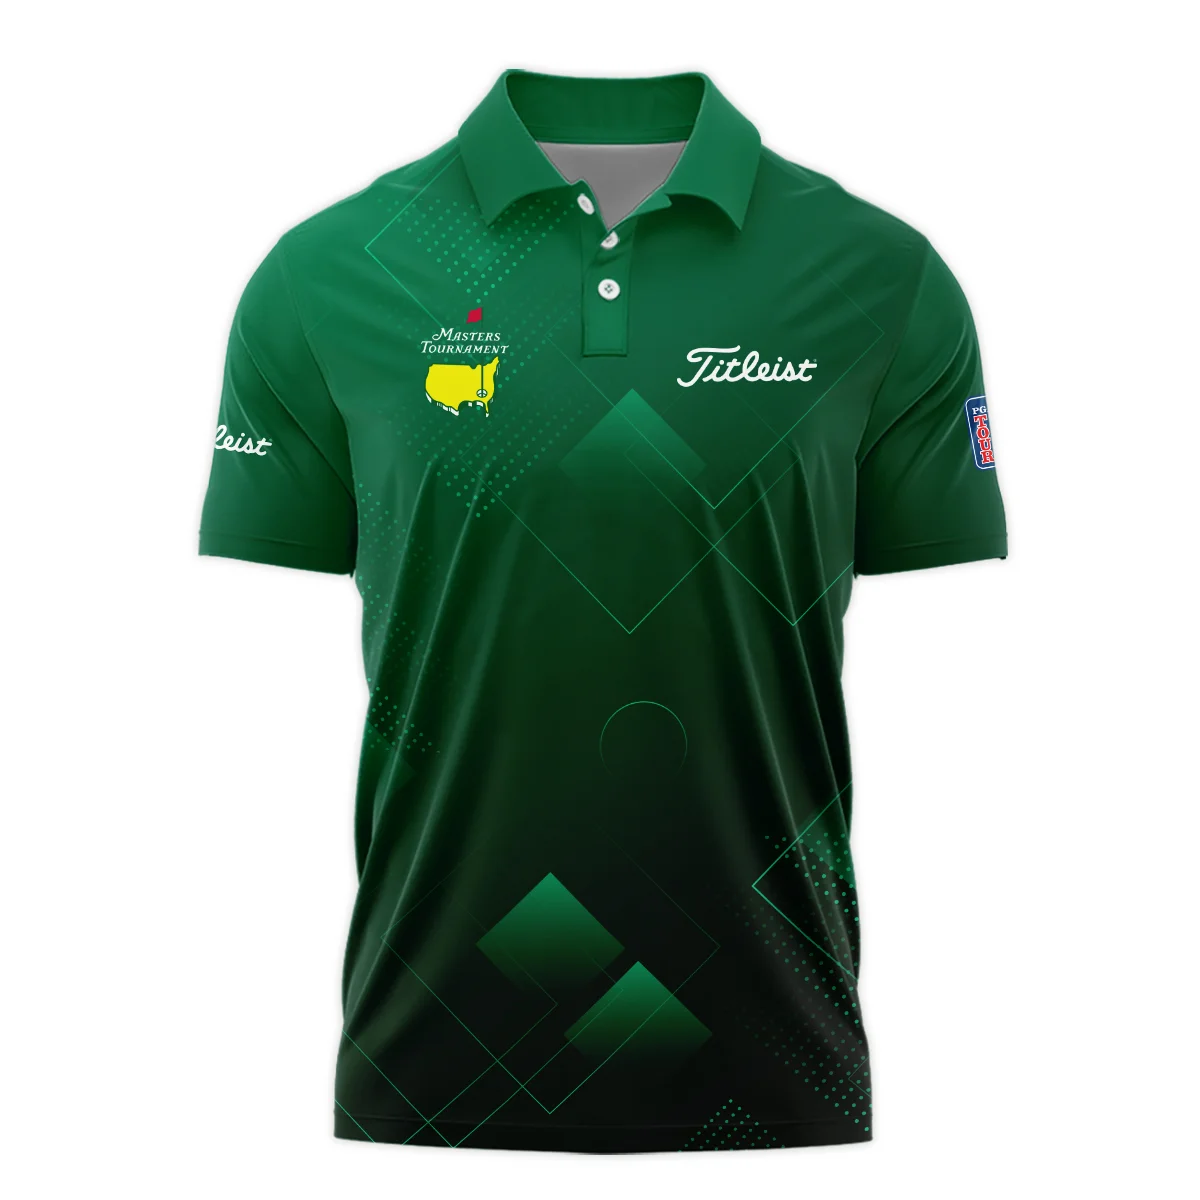 Masters Tournament Titleist Sleeveless Jacket Golf Sports Green Abstract Geometric Sleeveless Jacket